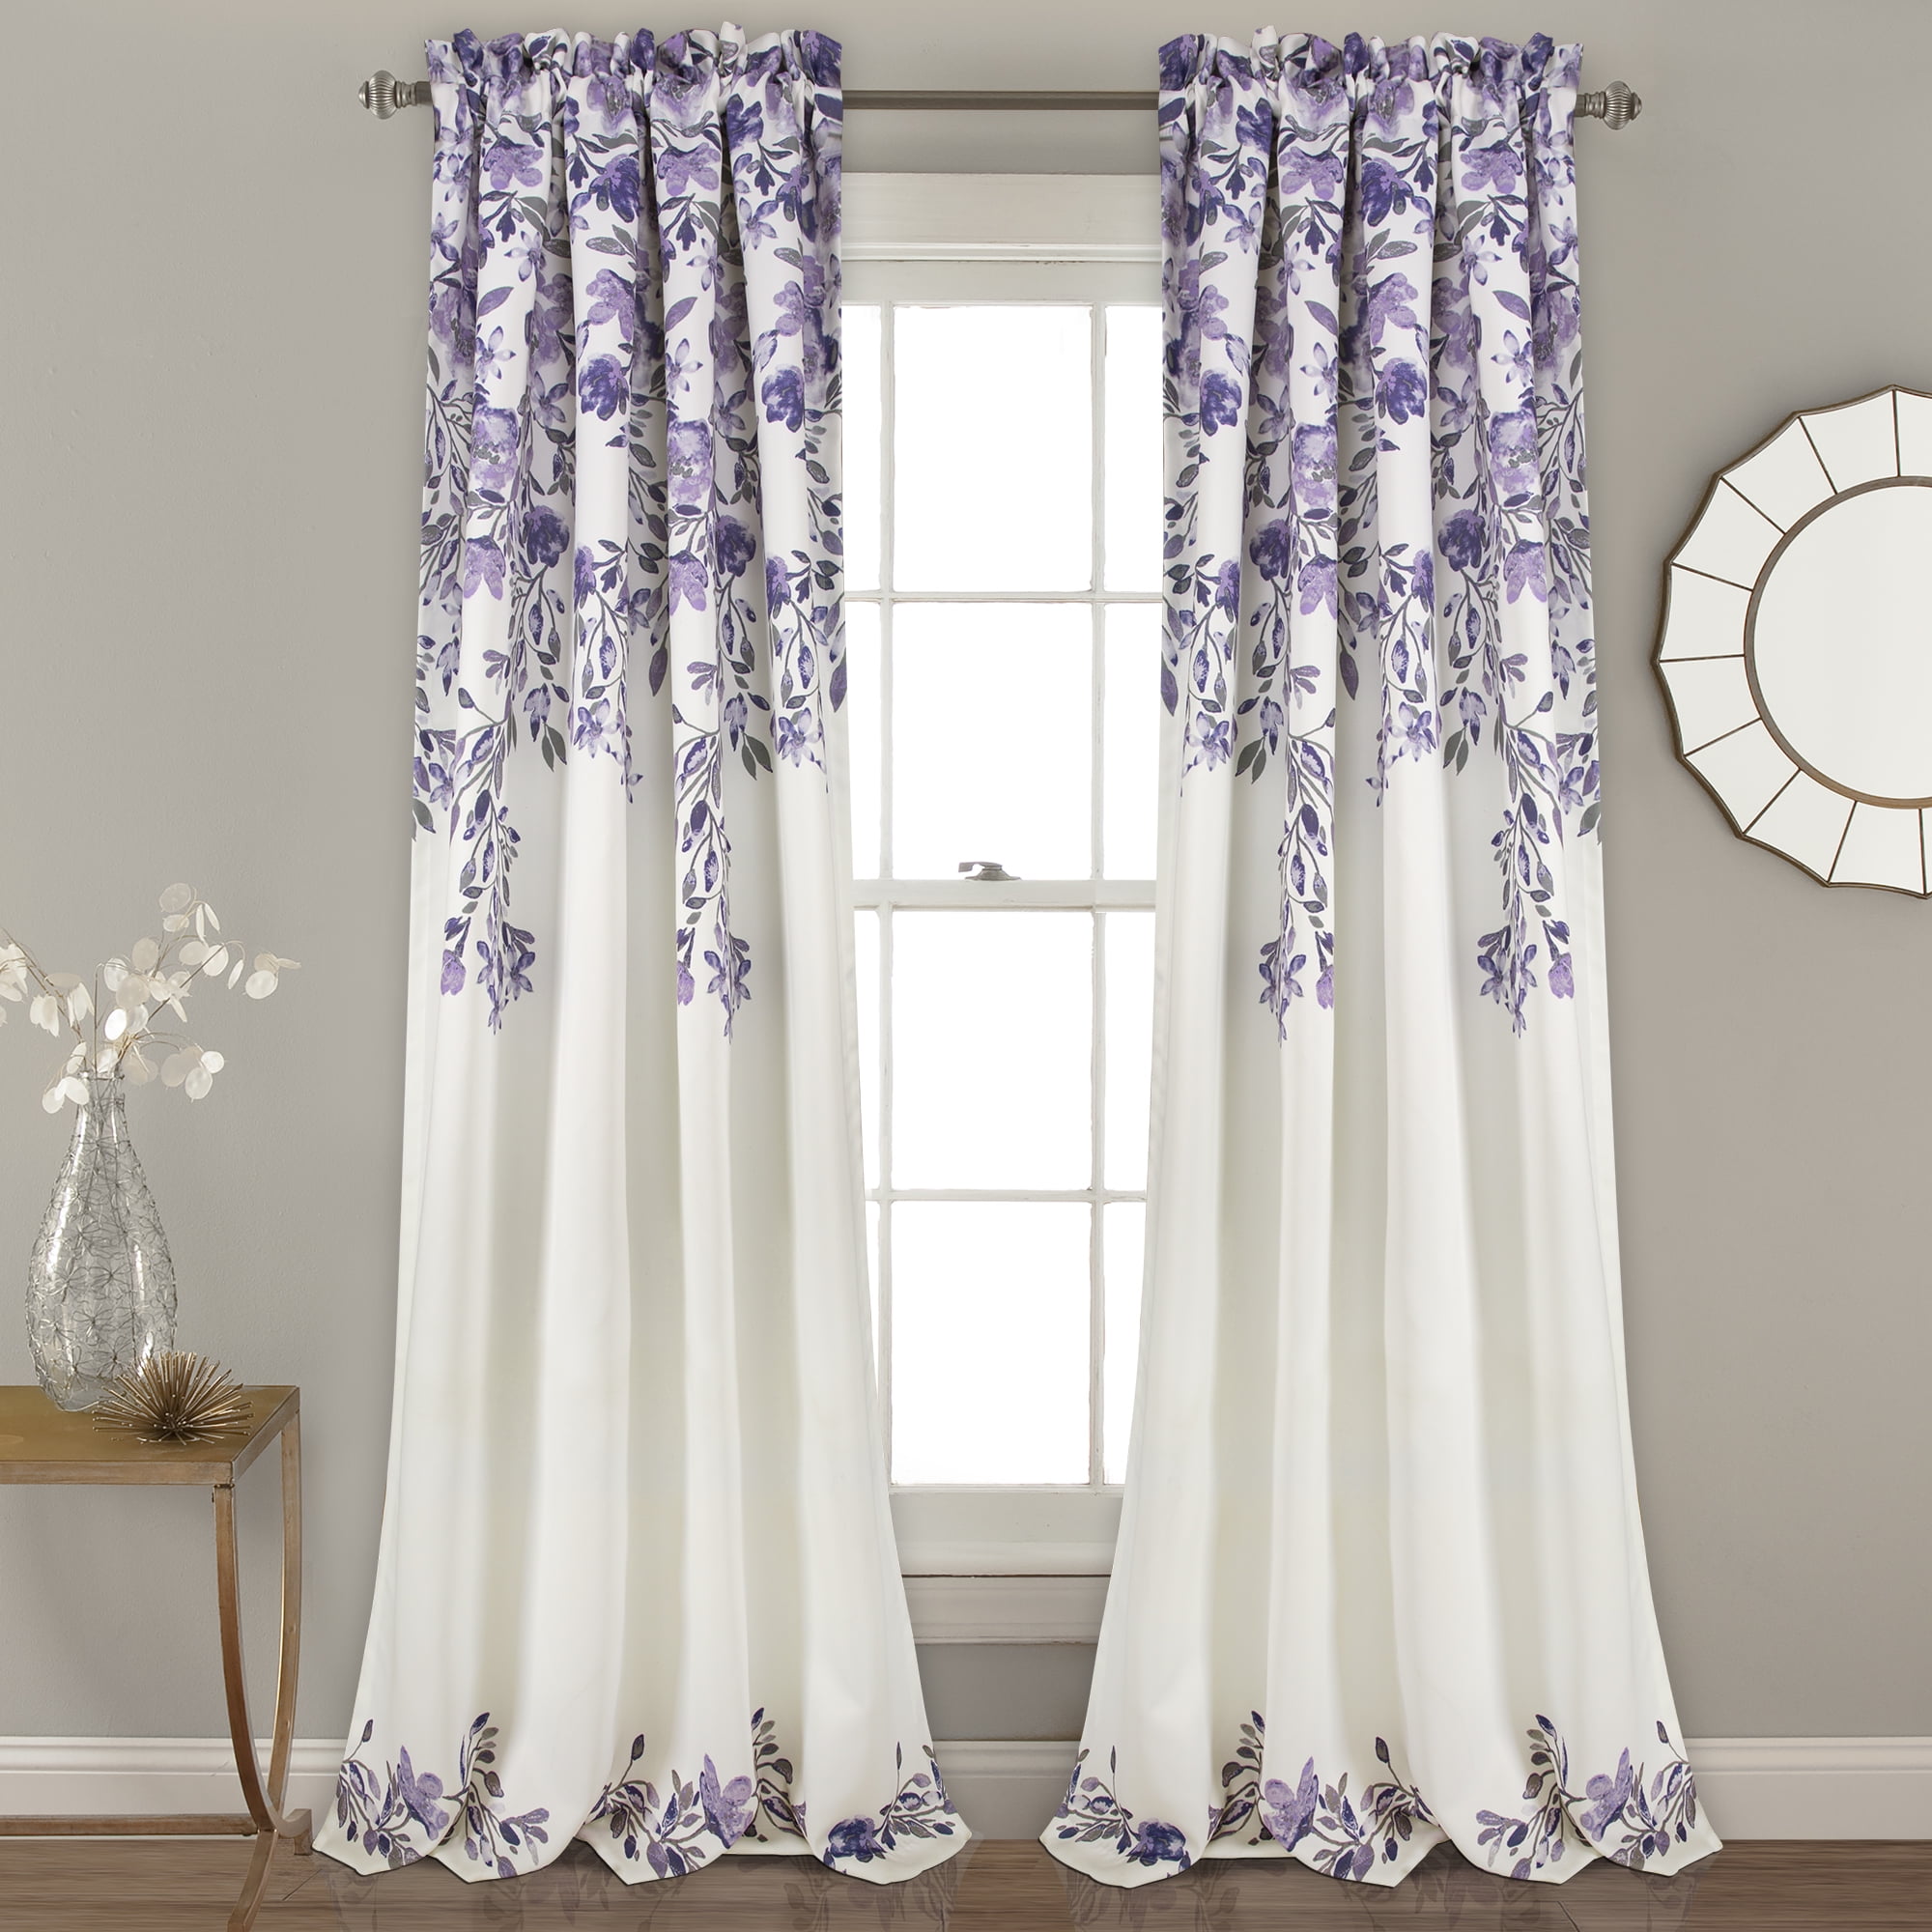 84" H Solid Purple Bedroom/Living Room Velvet Curtain Drapes Panel w/Rod Pocket 